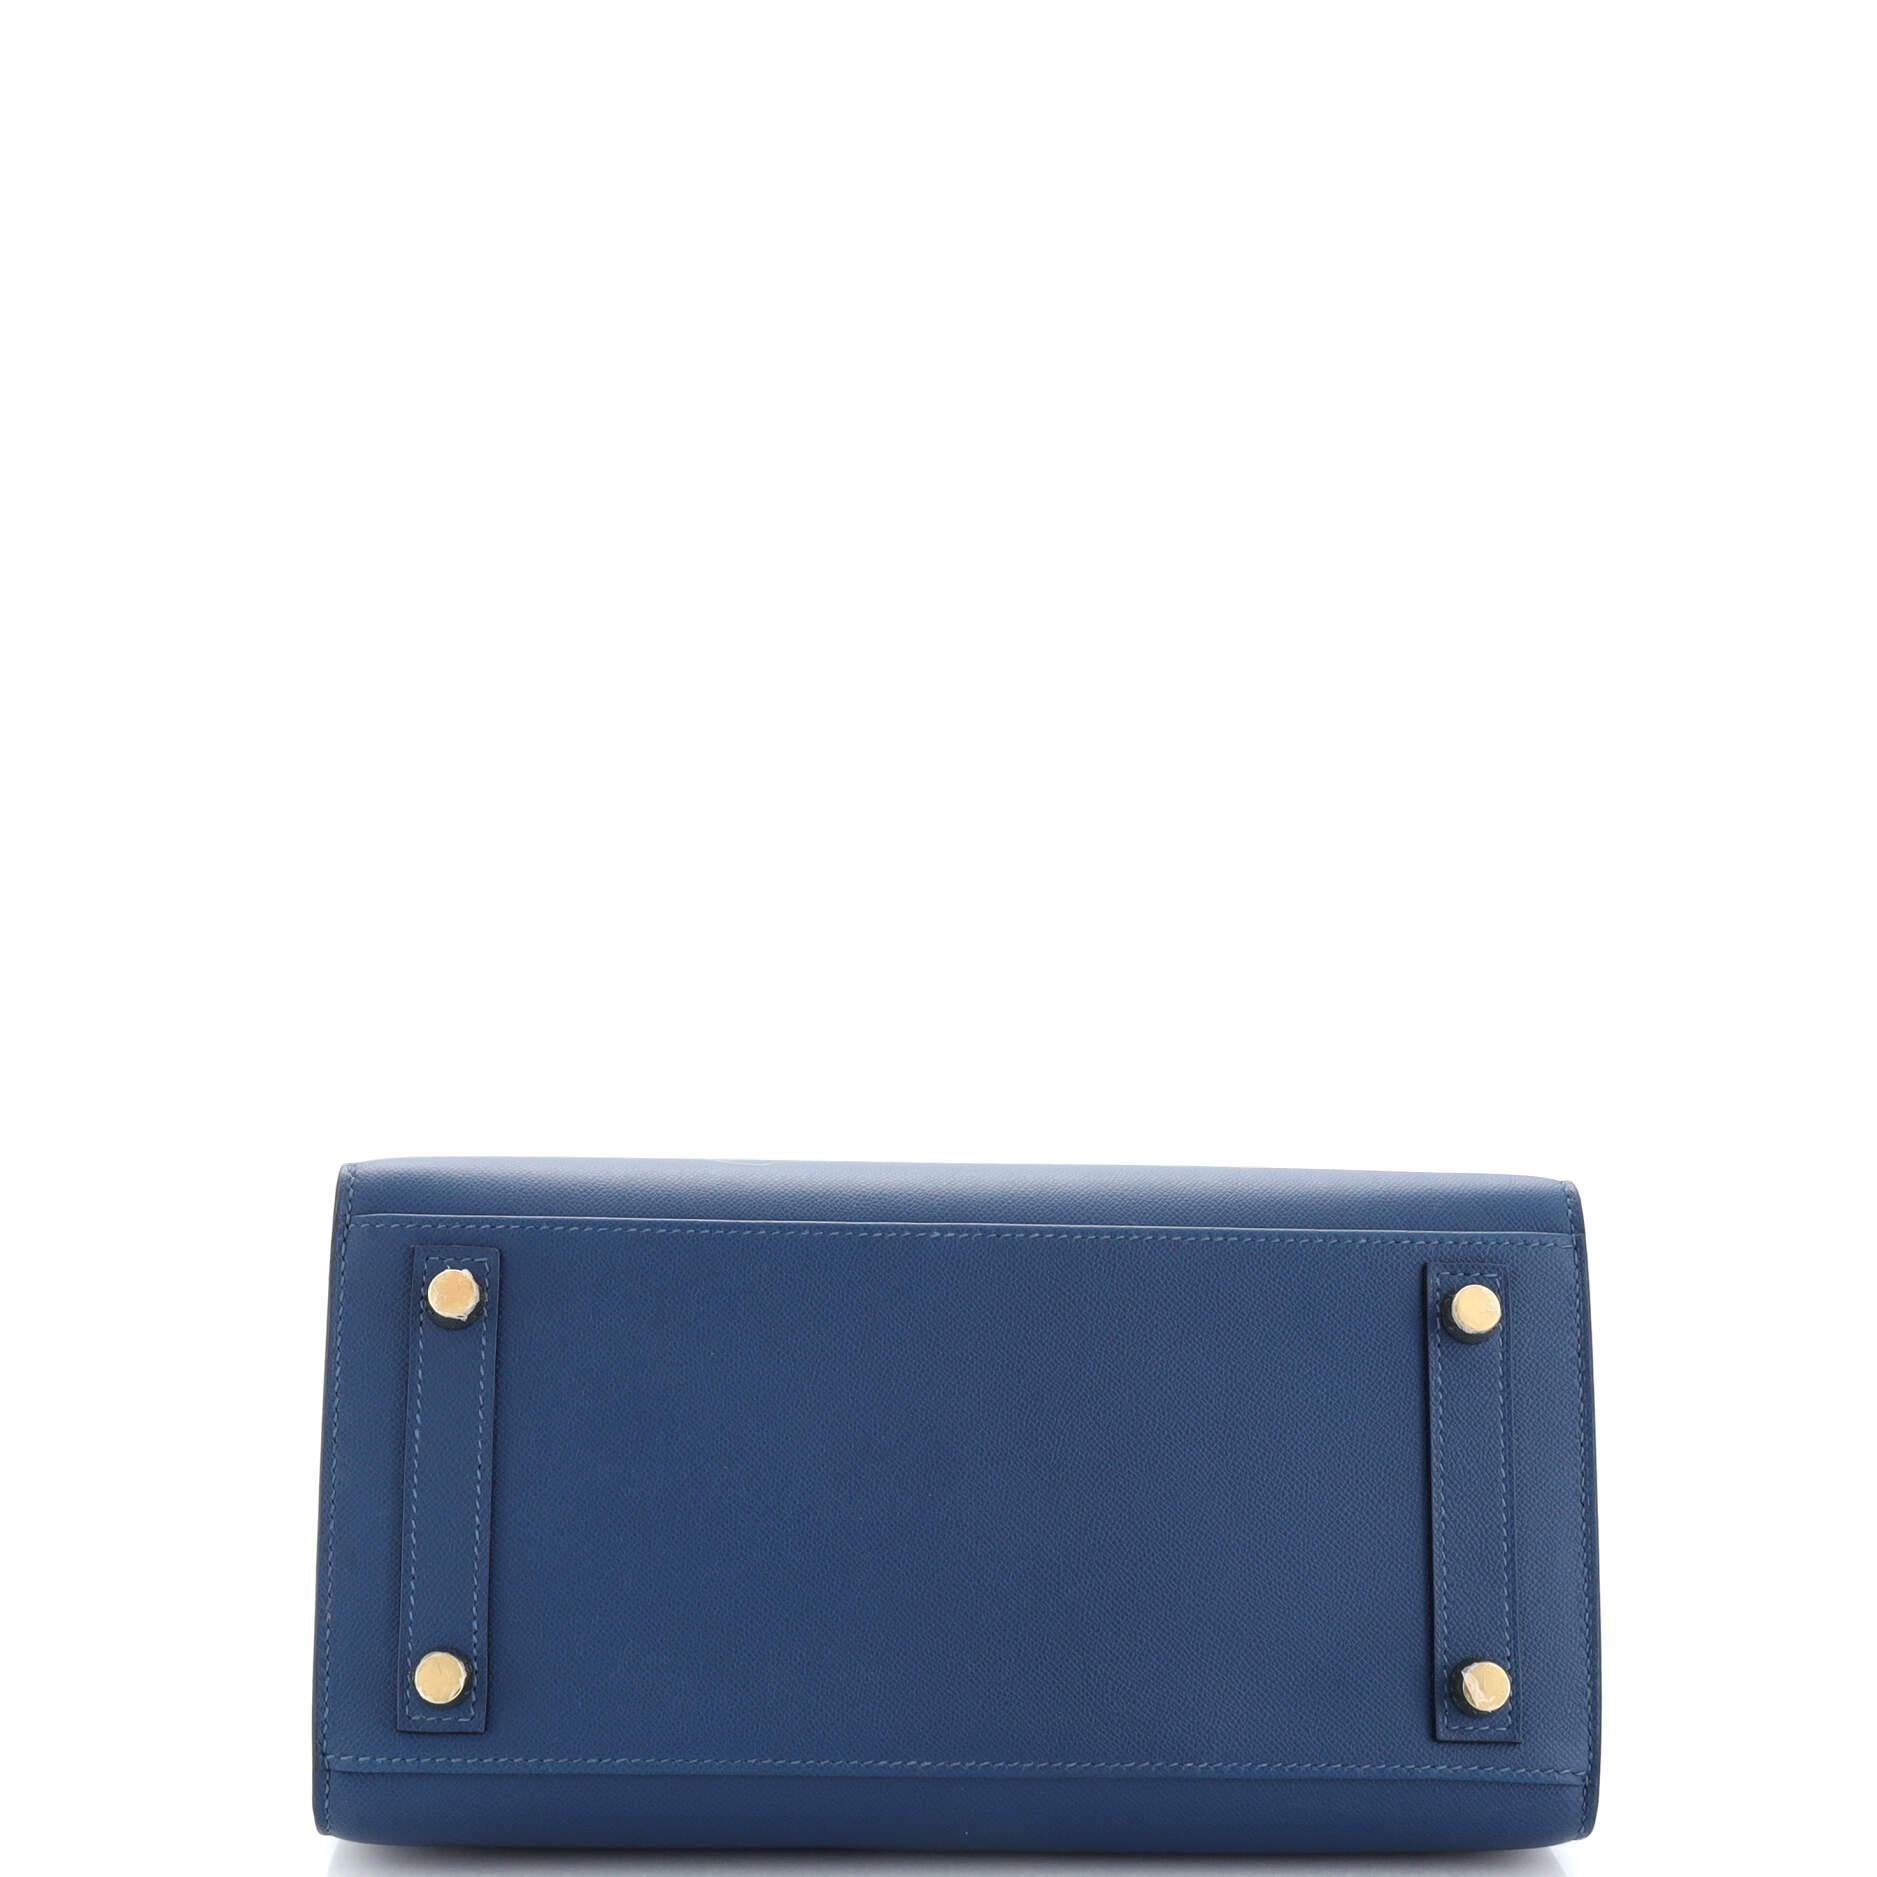 Women's Hermes Birkin Sellier Bag Deep Blue Madame with Gold Hardware 25